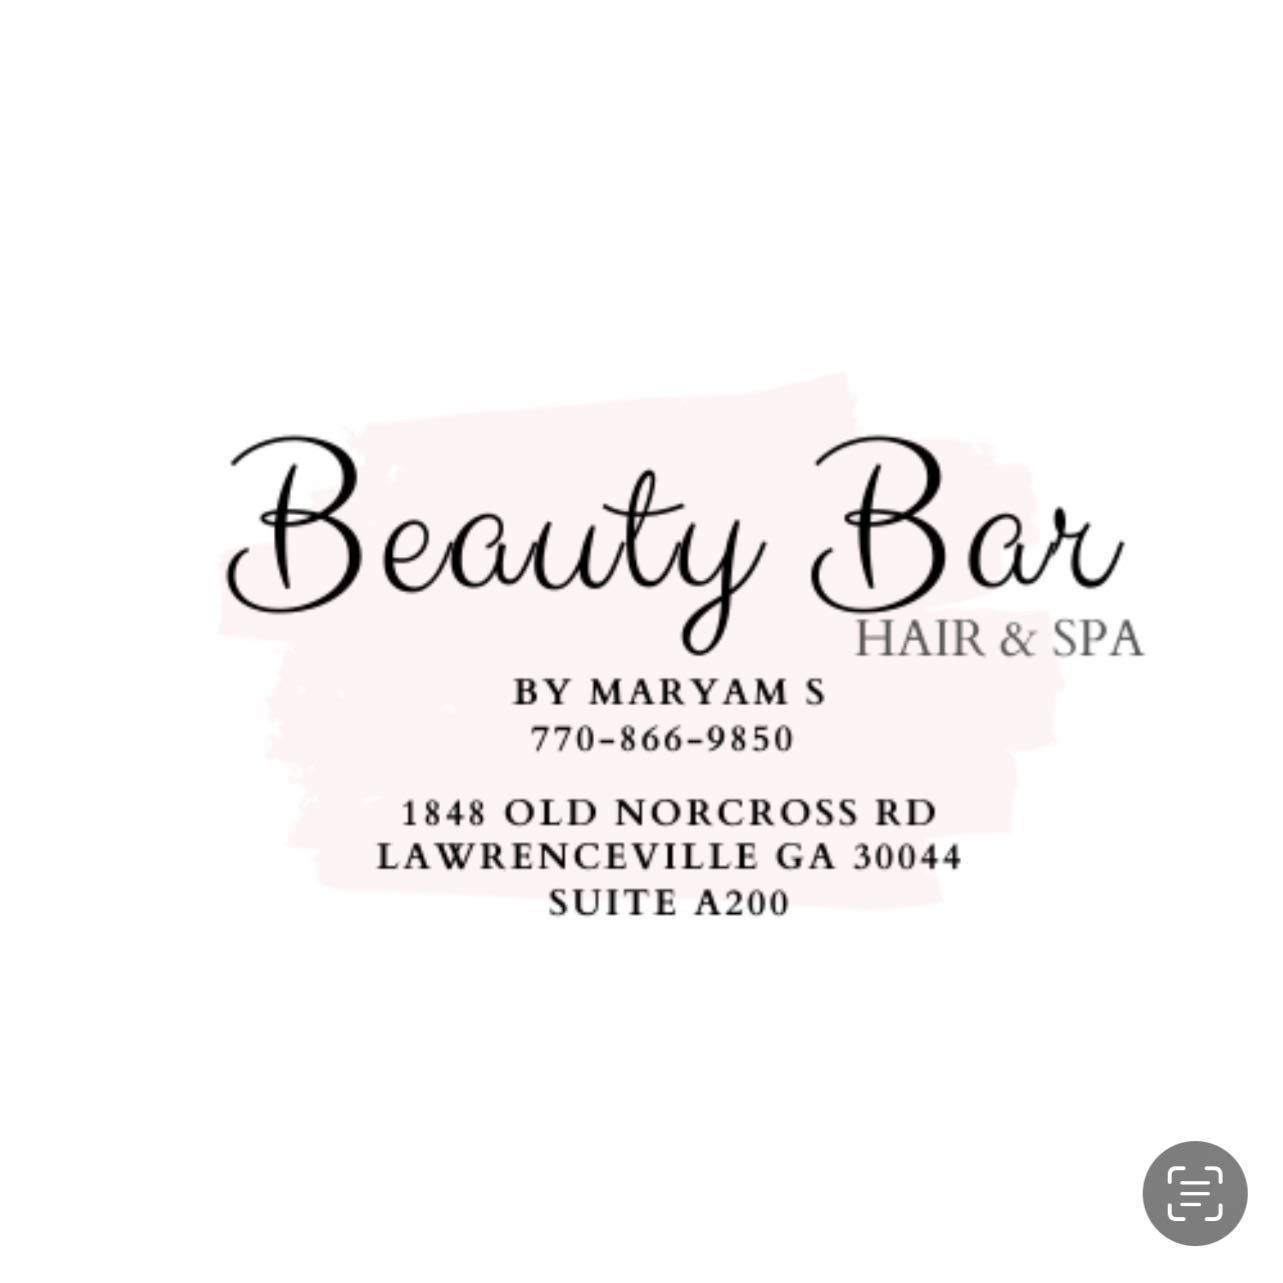 Beauty Bar Salon & Spa - Hewlett - Book Online - Prices, Reviews